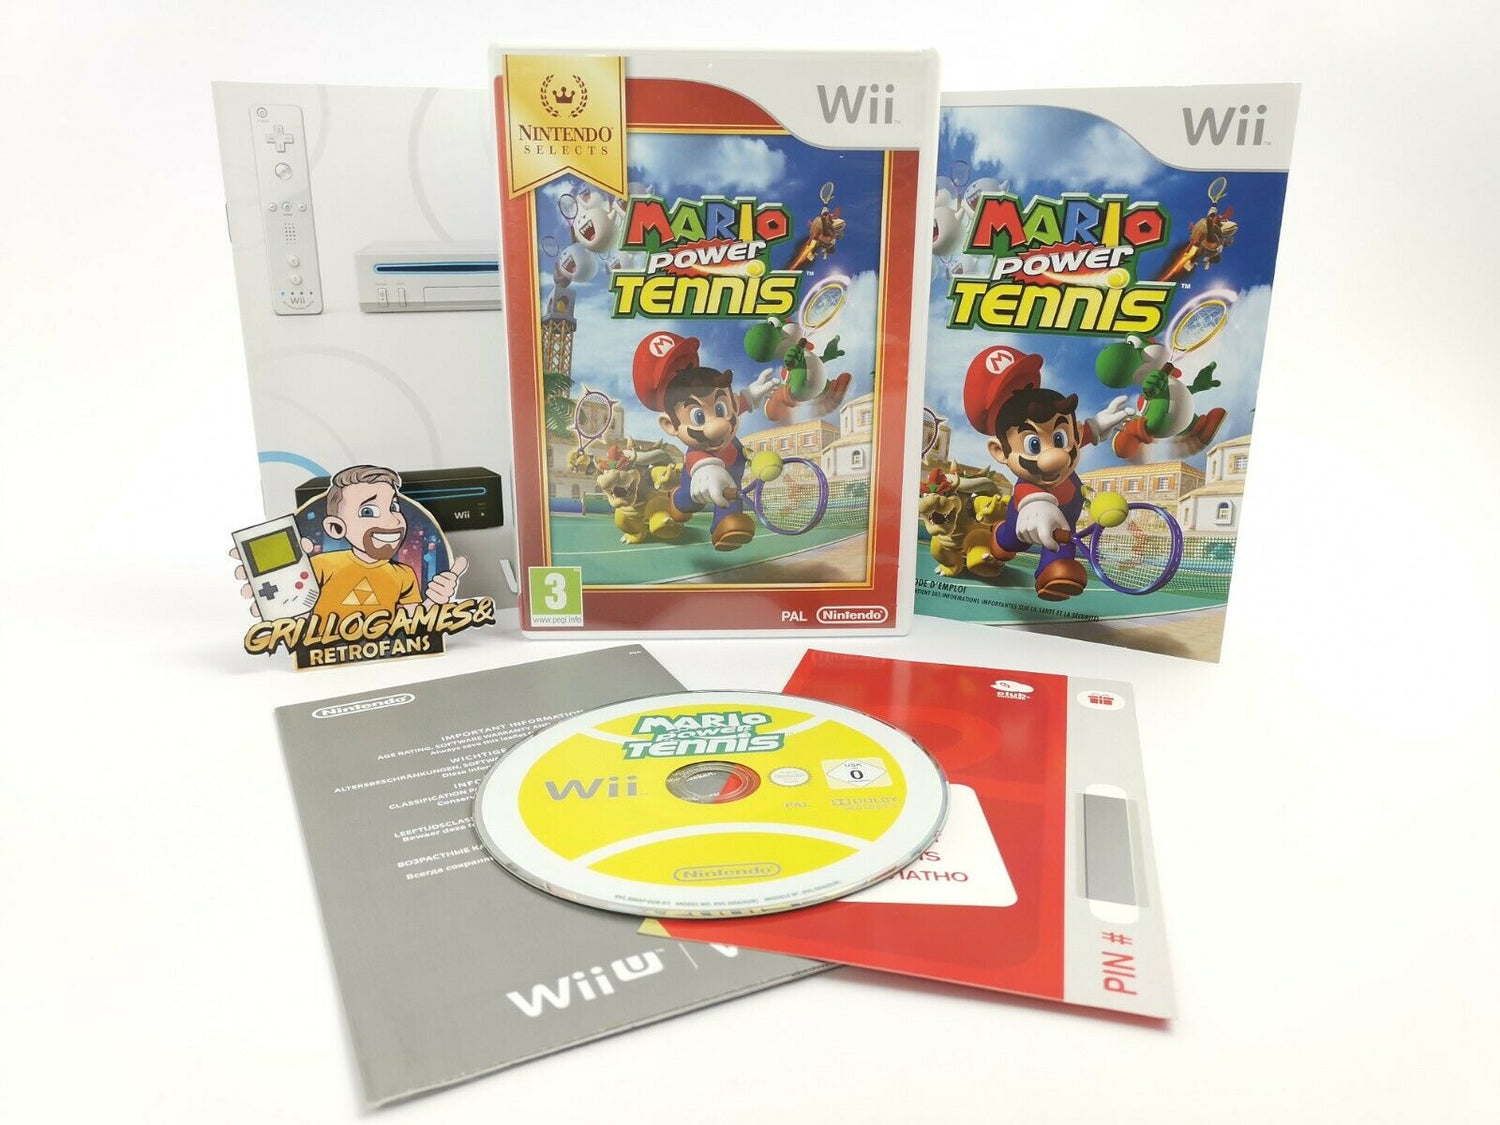 Nintendo Wii game 